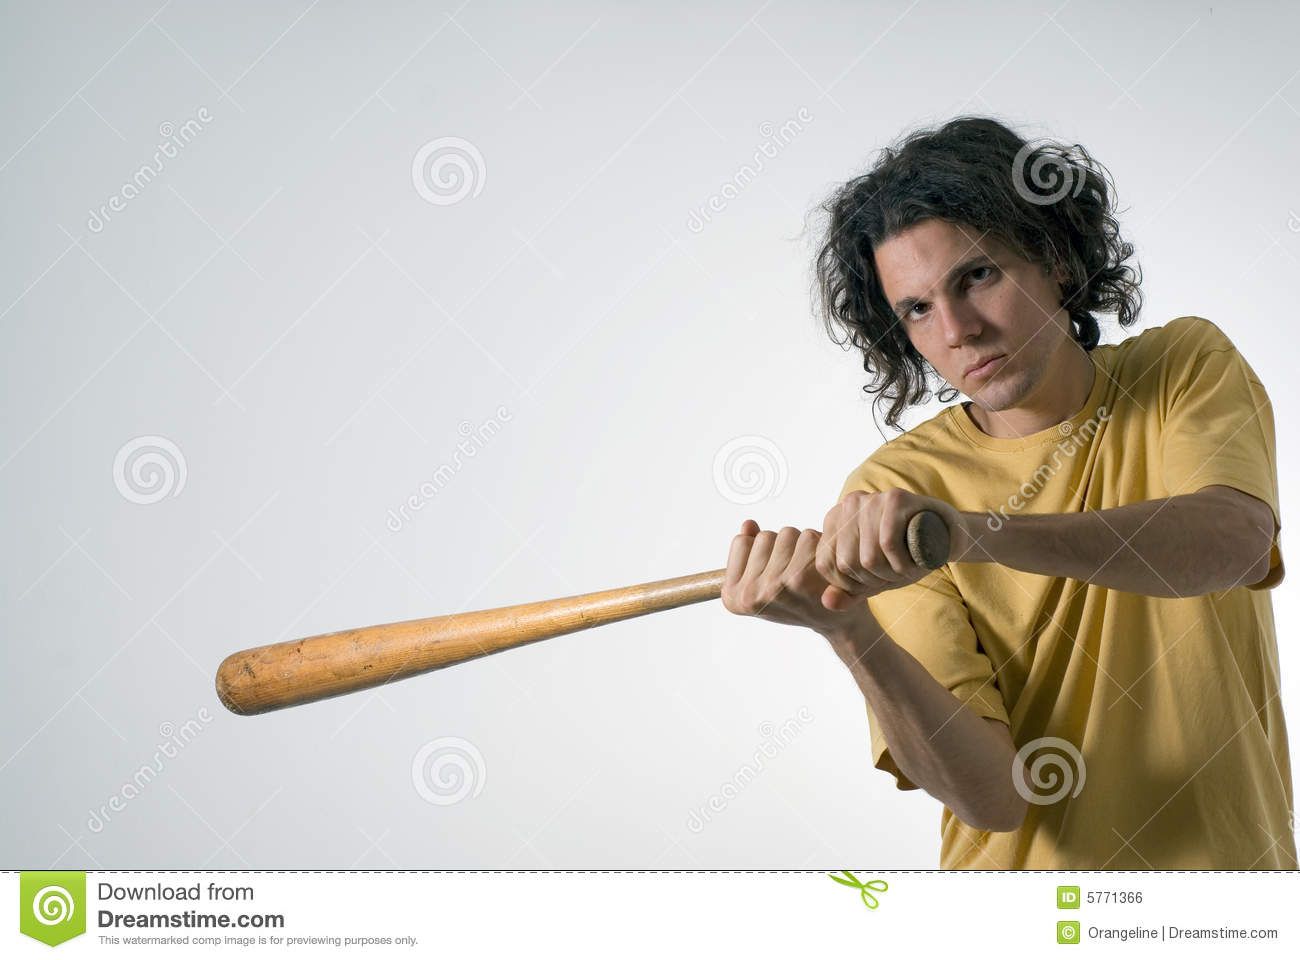 Joker reccomend Girl swinging a baseball bat